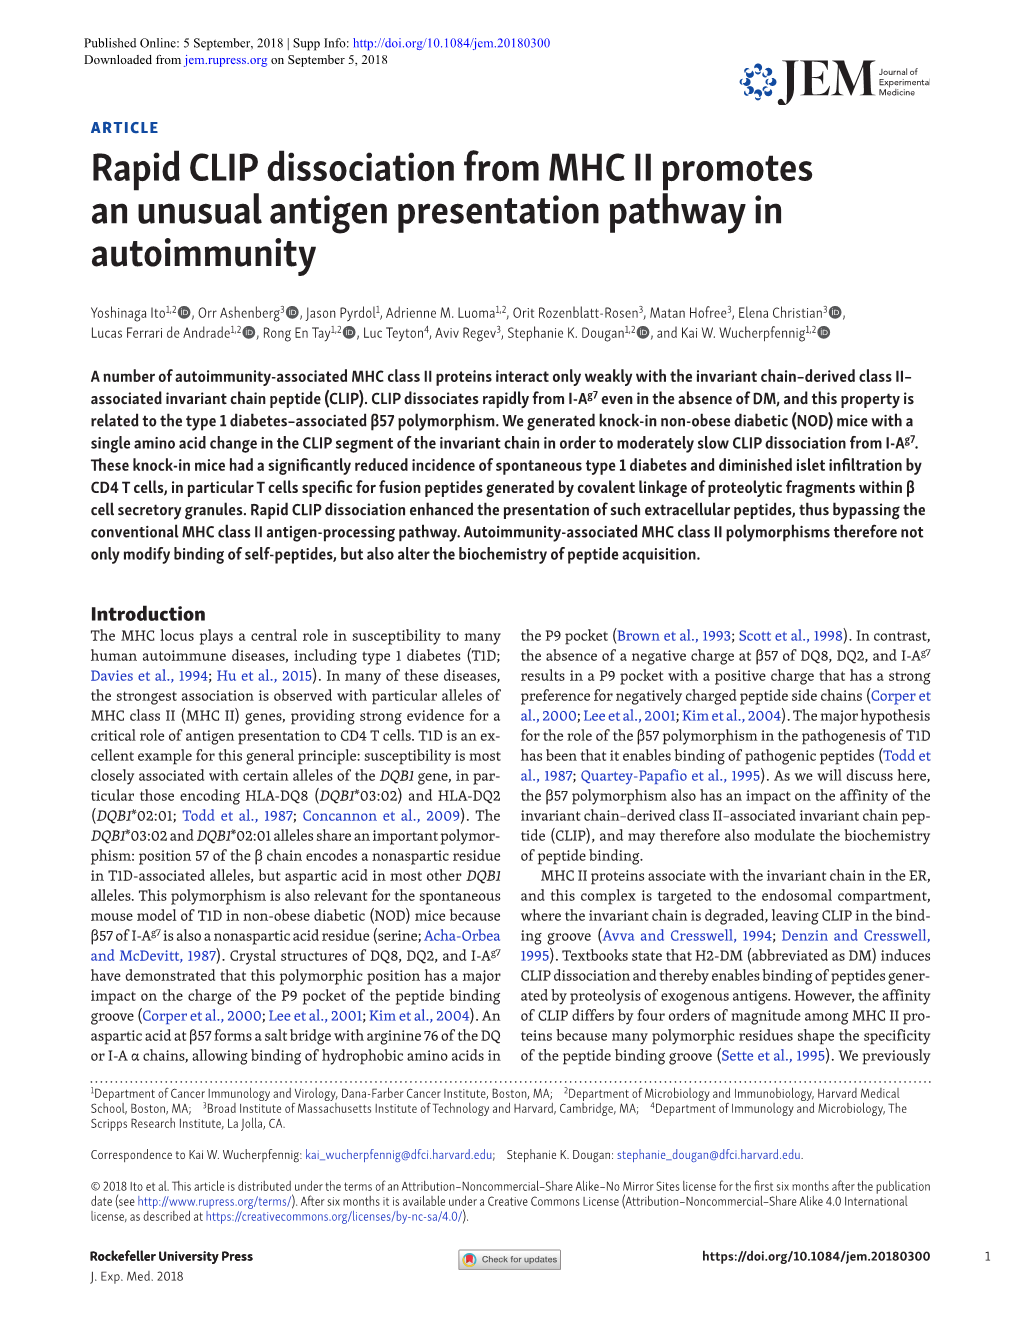 Rapid CLIP Dissociation from MHC II Promotes an Unusual Antigen Presentation Pathway in Autoimmunity